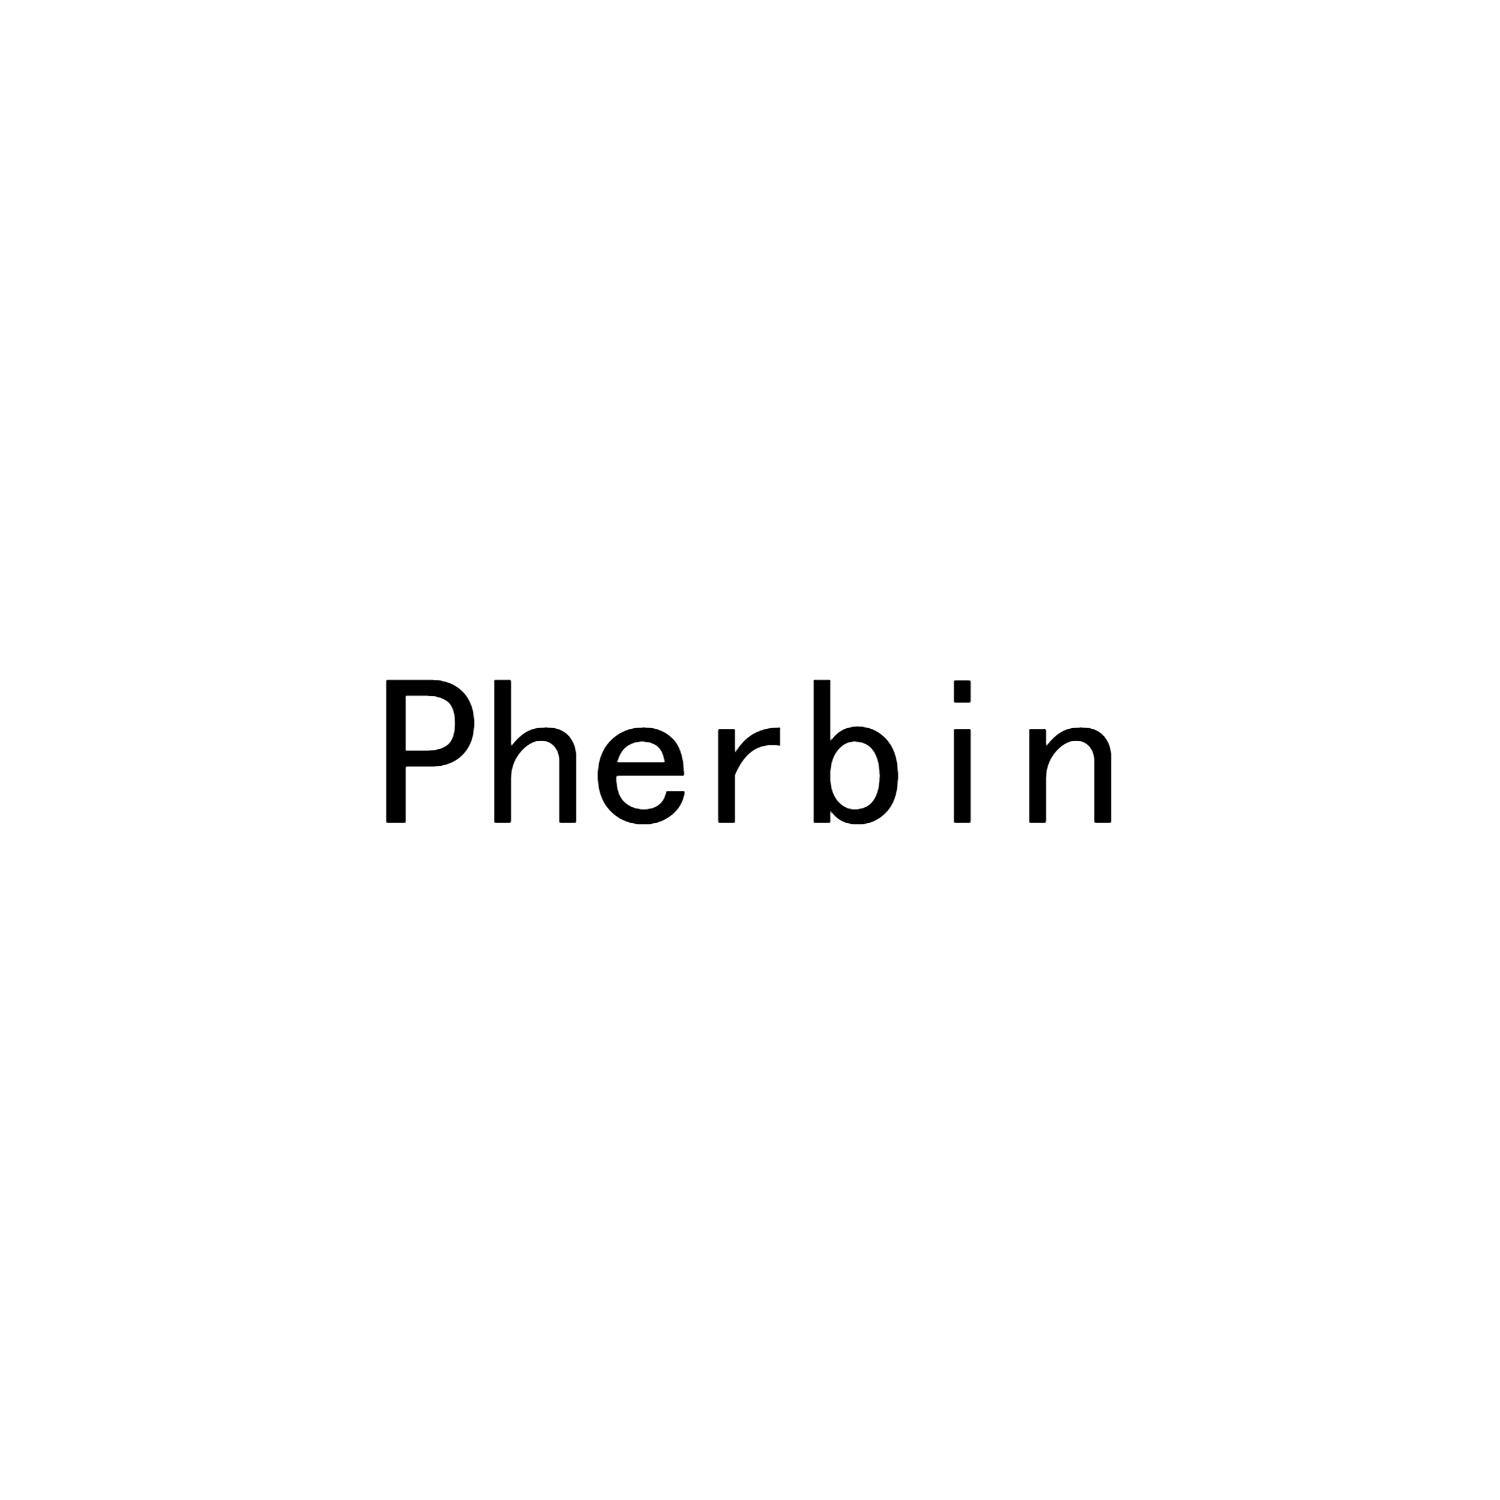 PHERBIN